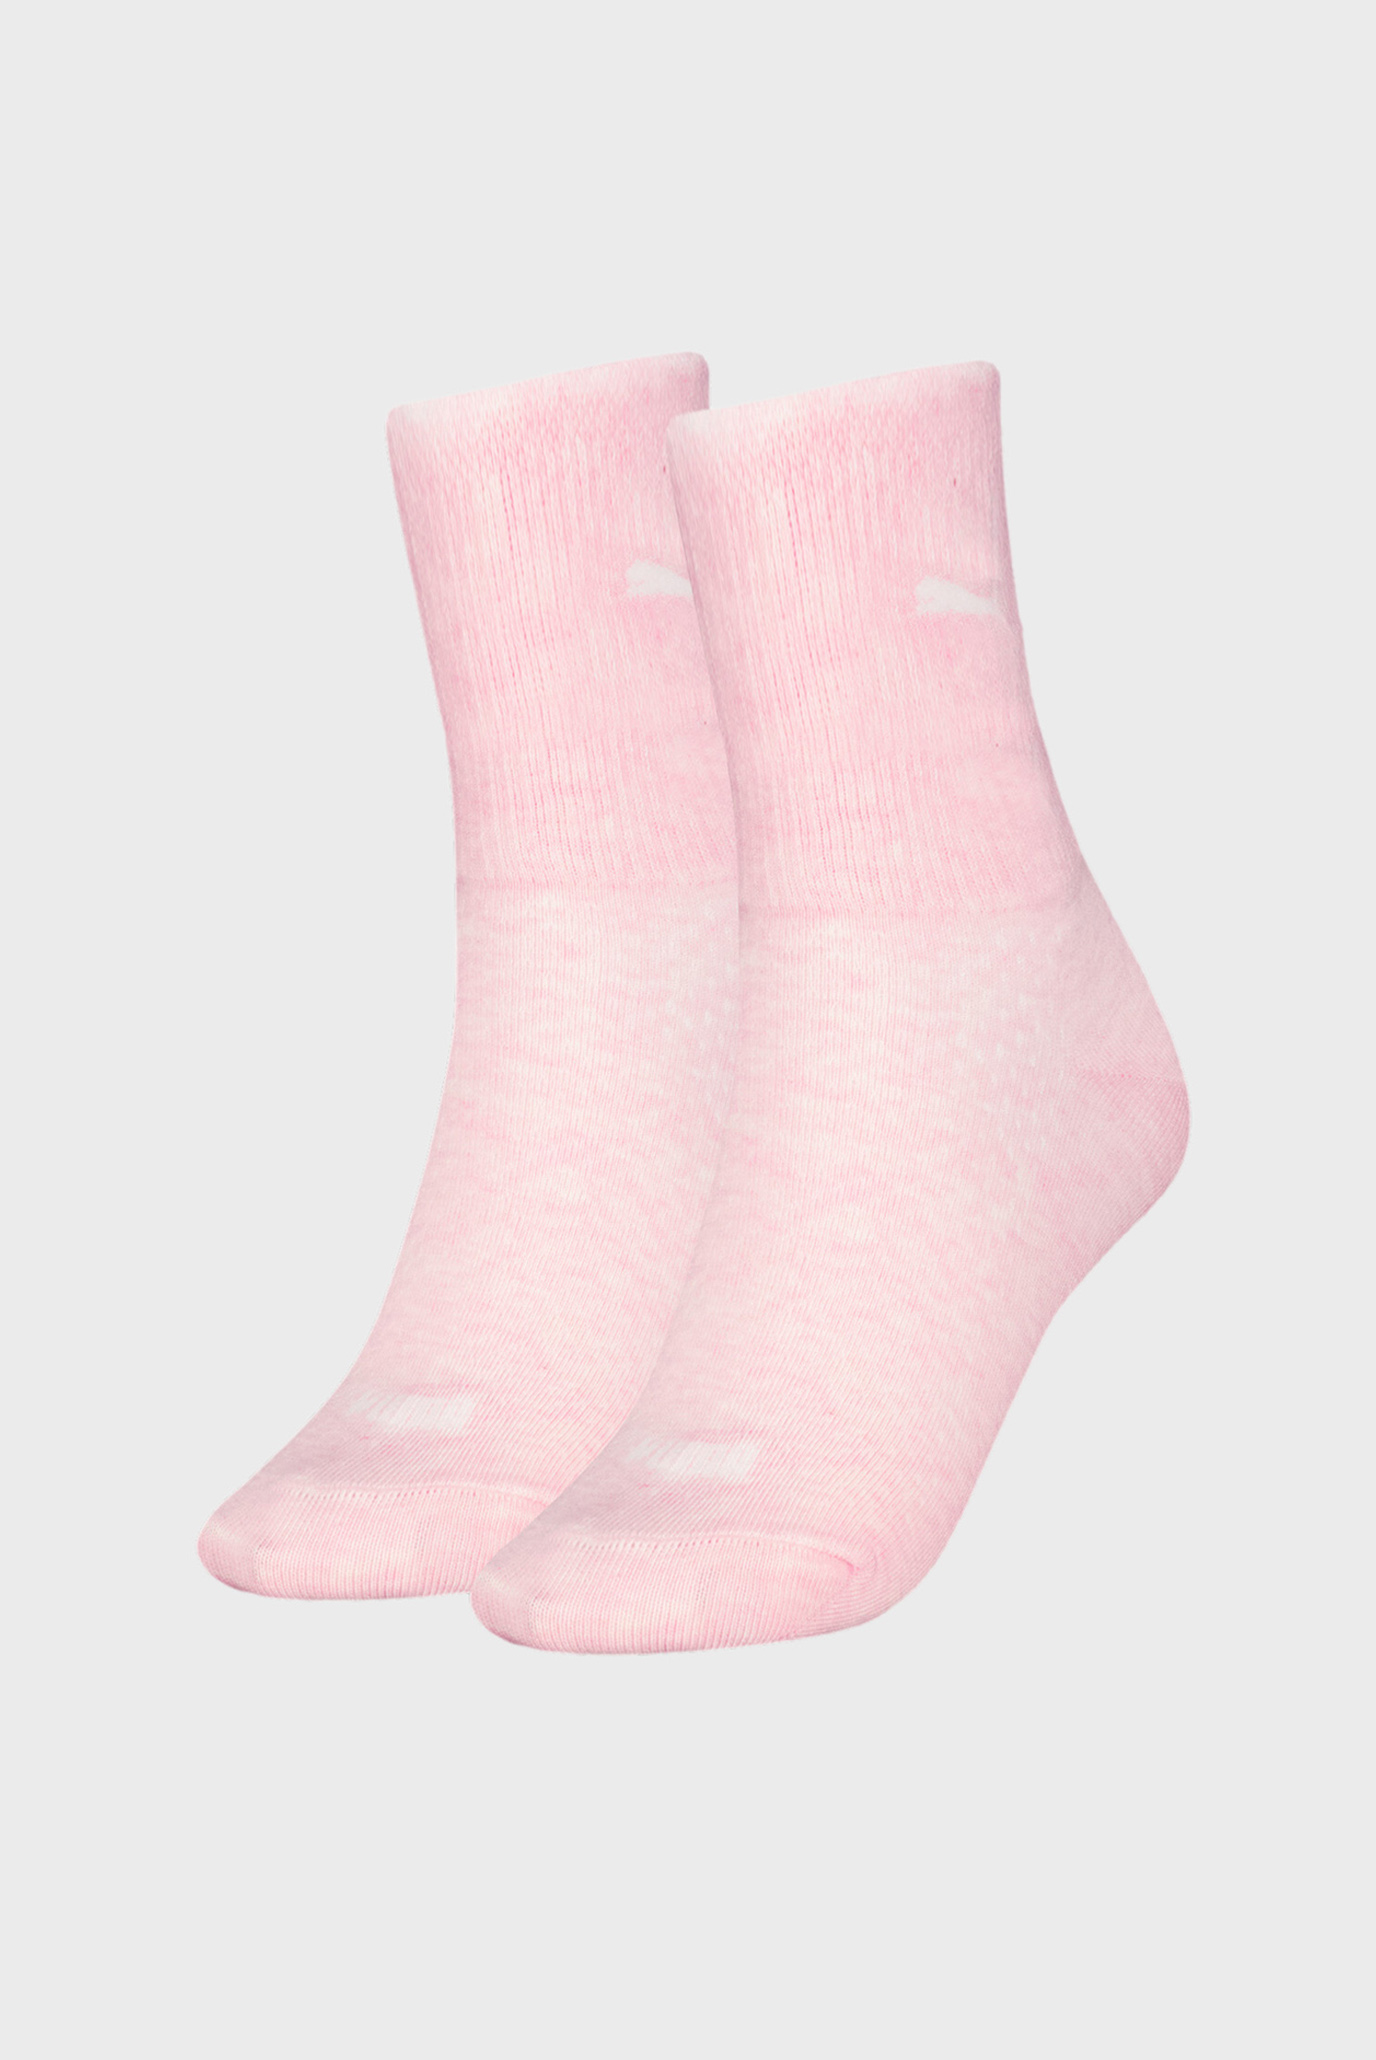 Женские розовые носки (2 пары) PUMA Women's Classic Socks 2 Pack 1